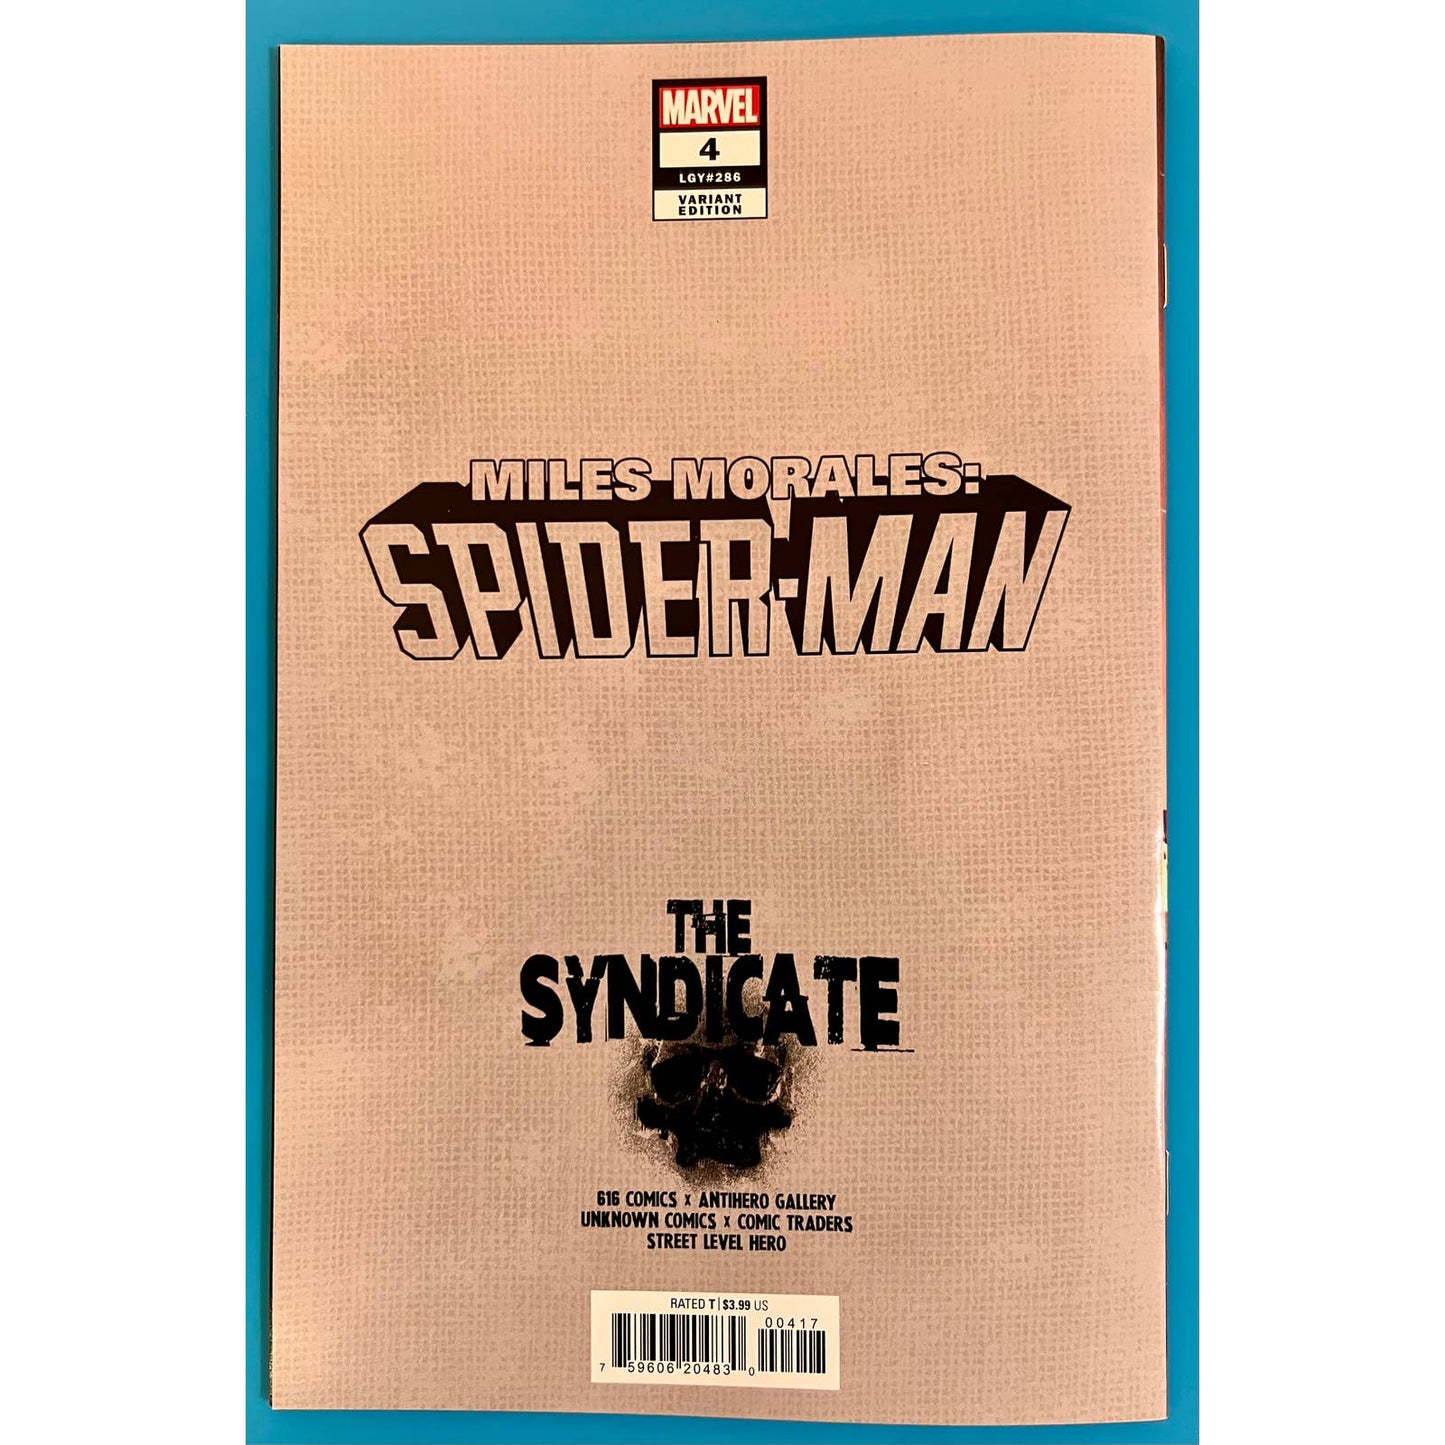 Miles Morales: Spider-Man #4I (KEY) Lucio Parillo Virgin Variant